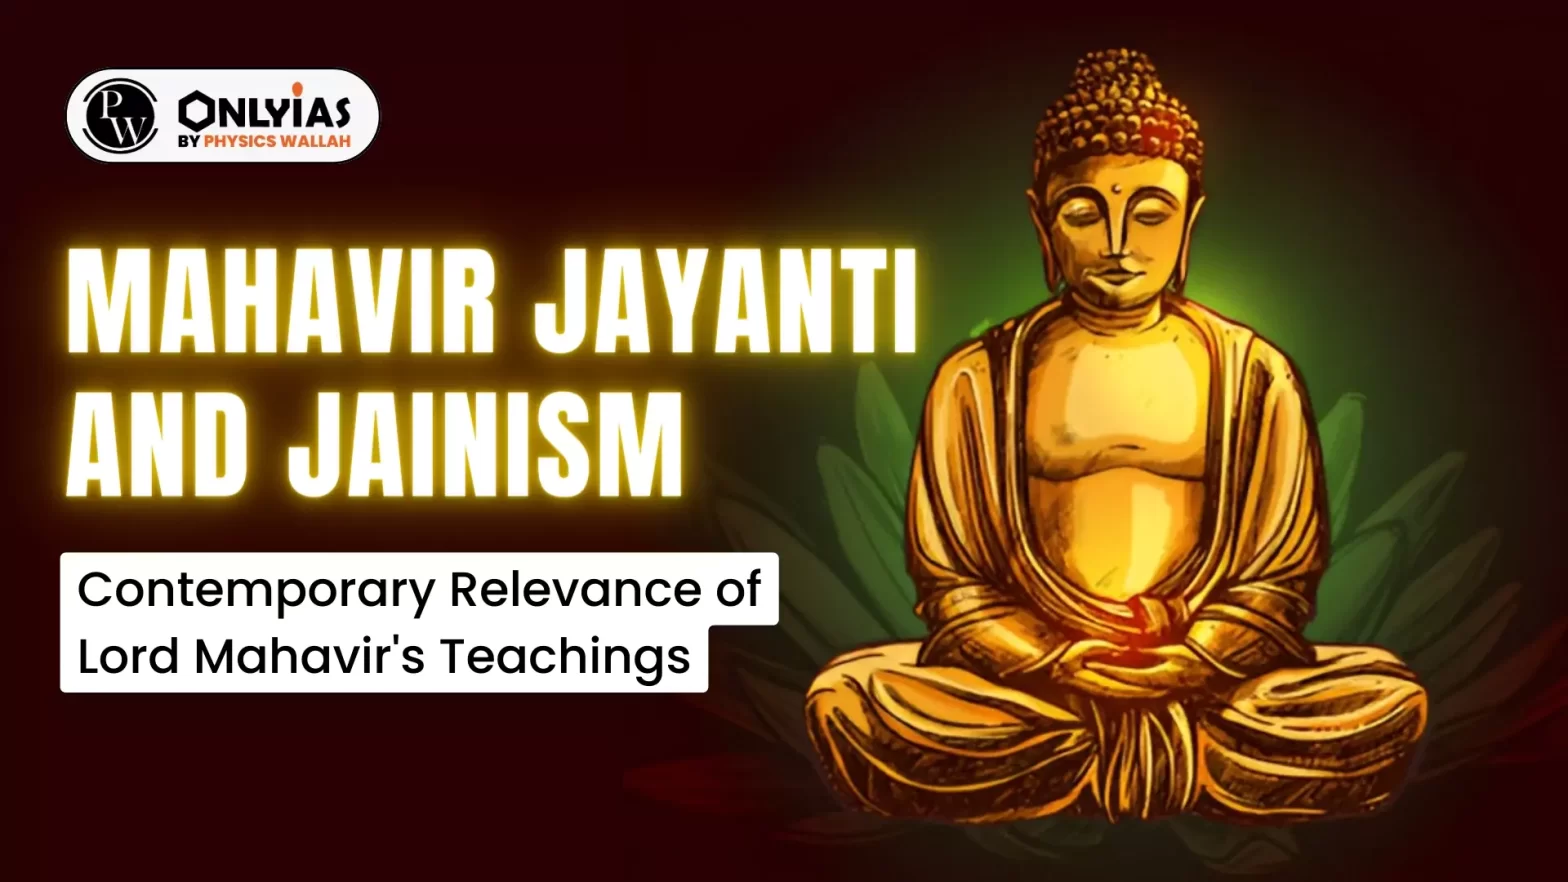 Mahavir Jayanti and Jainism: Contemporary Relevance of Lord Mahavir’s Teachings